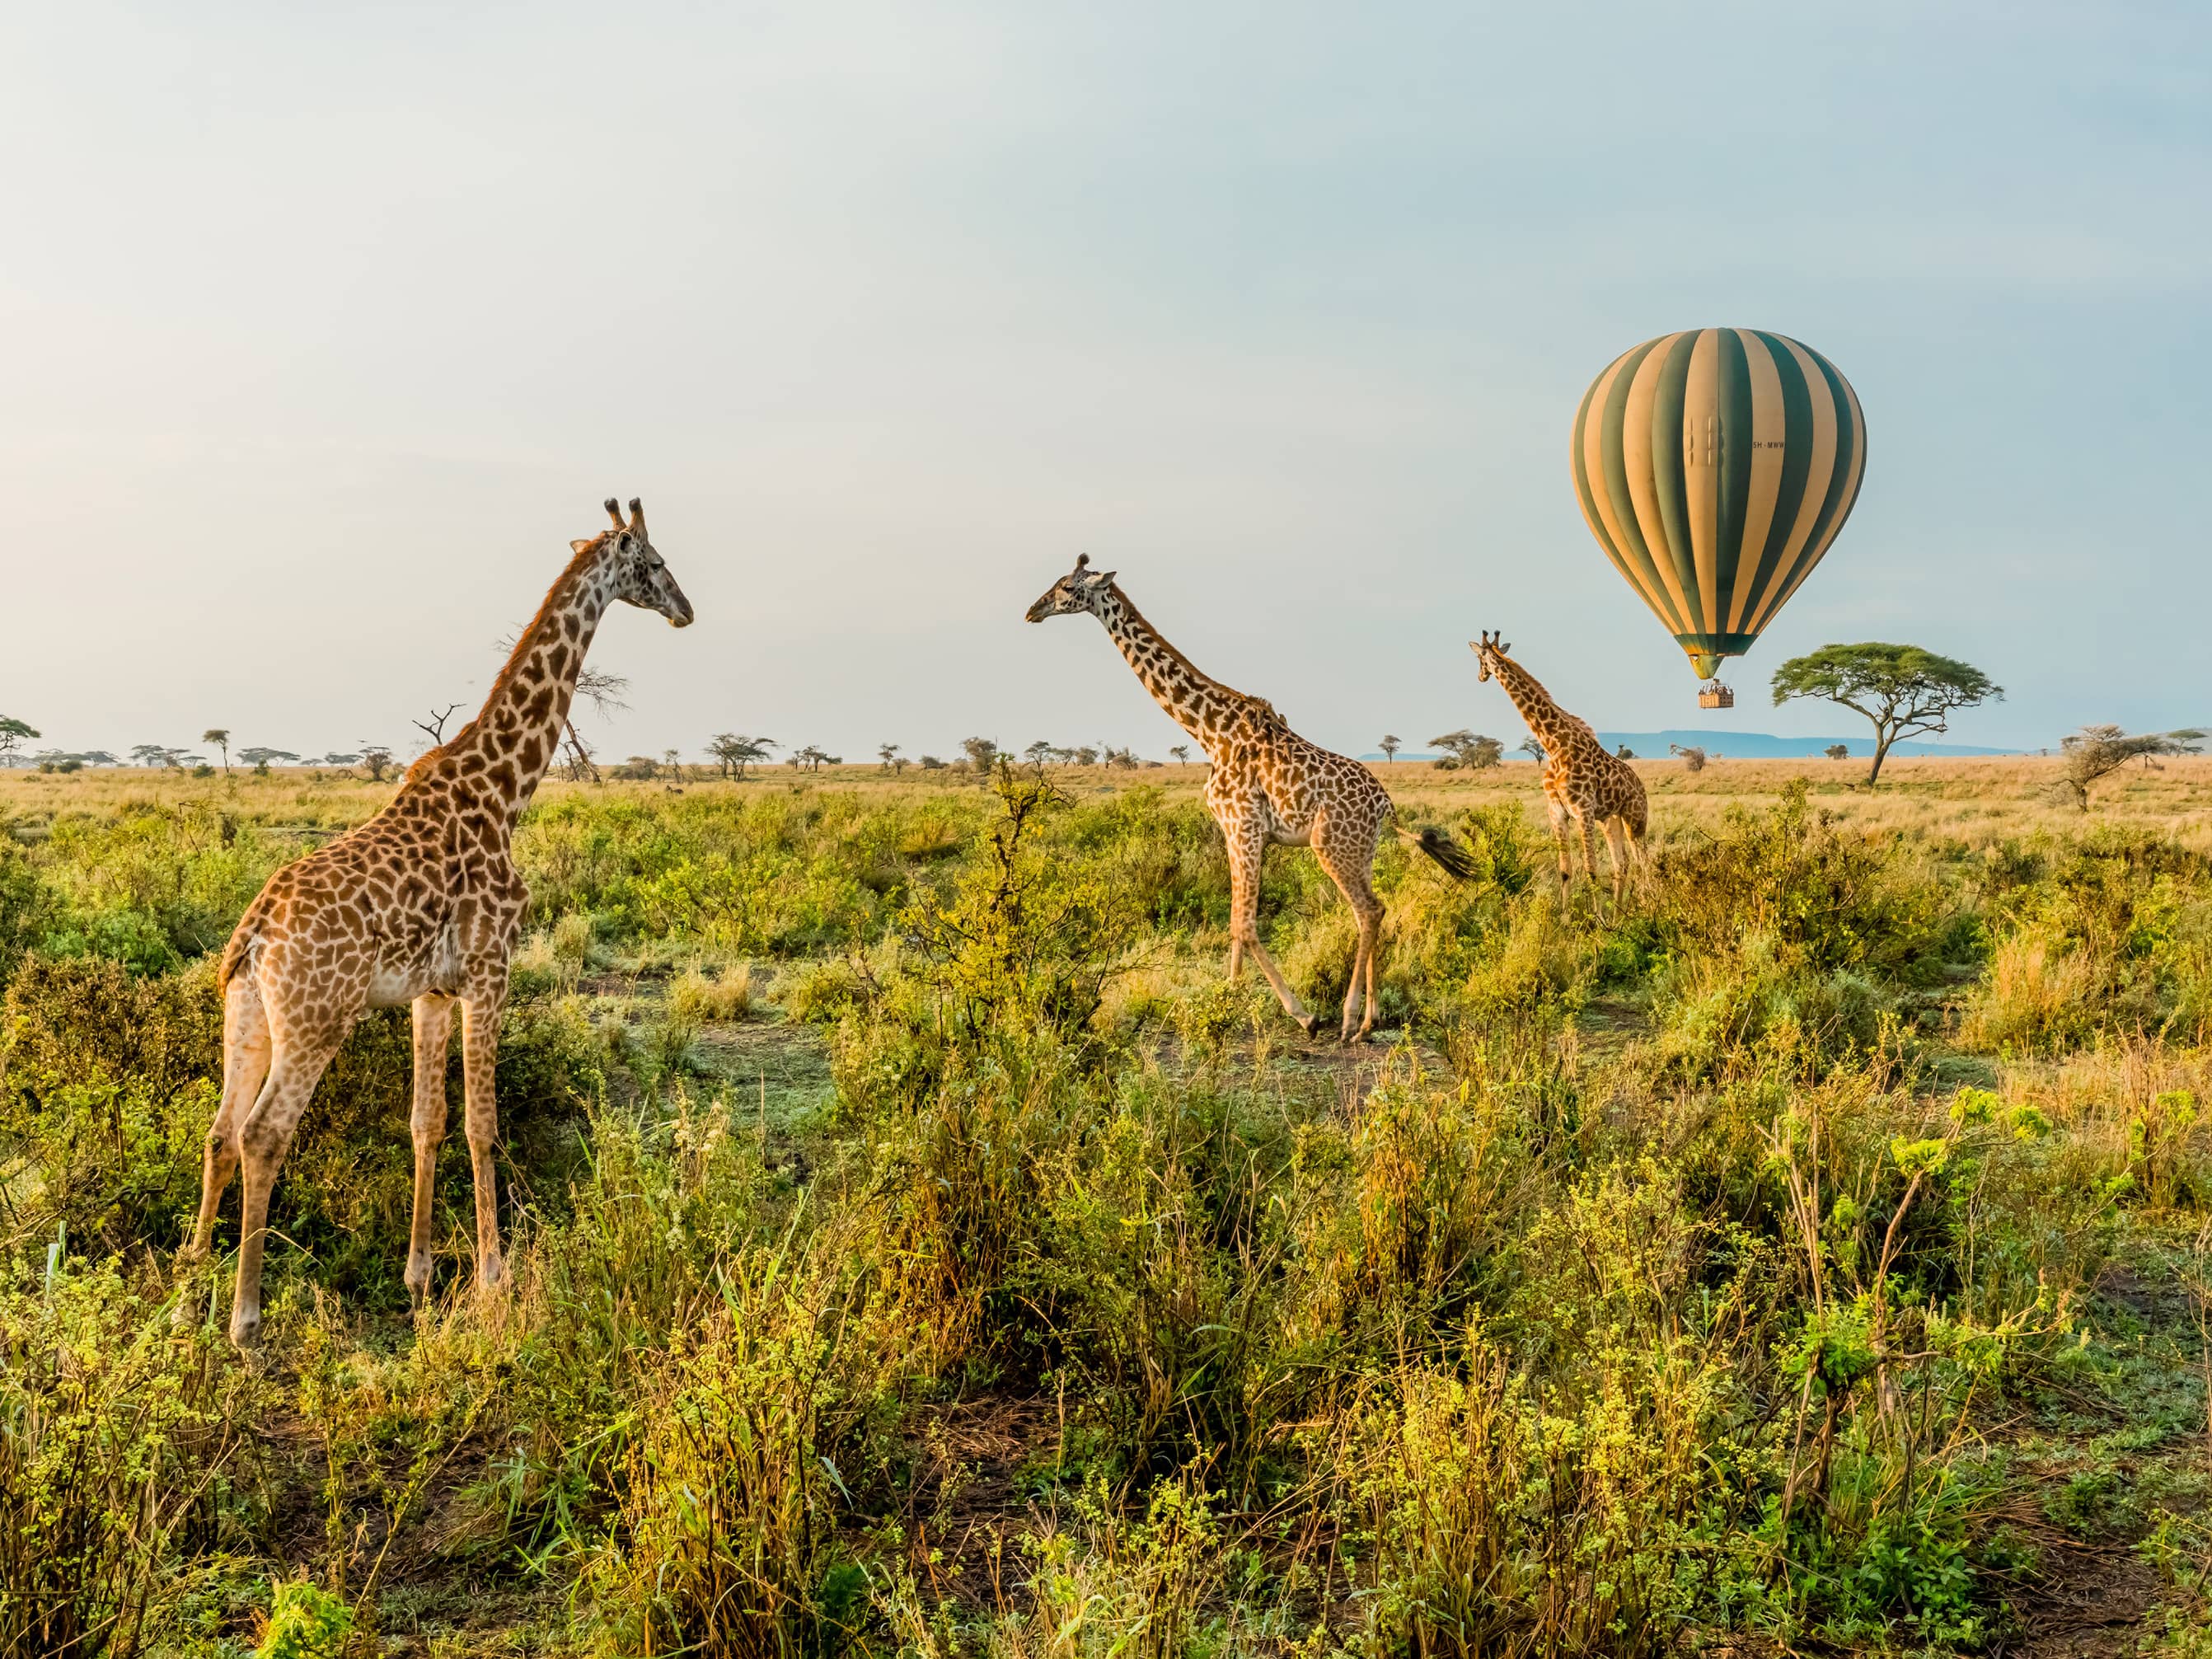  Soar above the Serengeti in a hot air balloon  